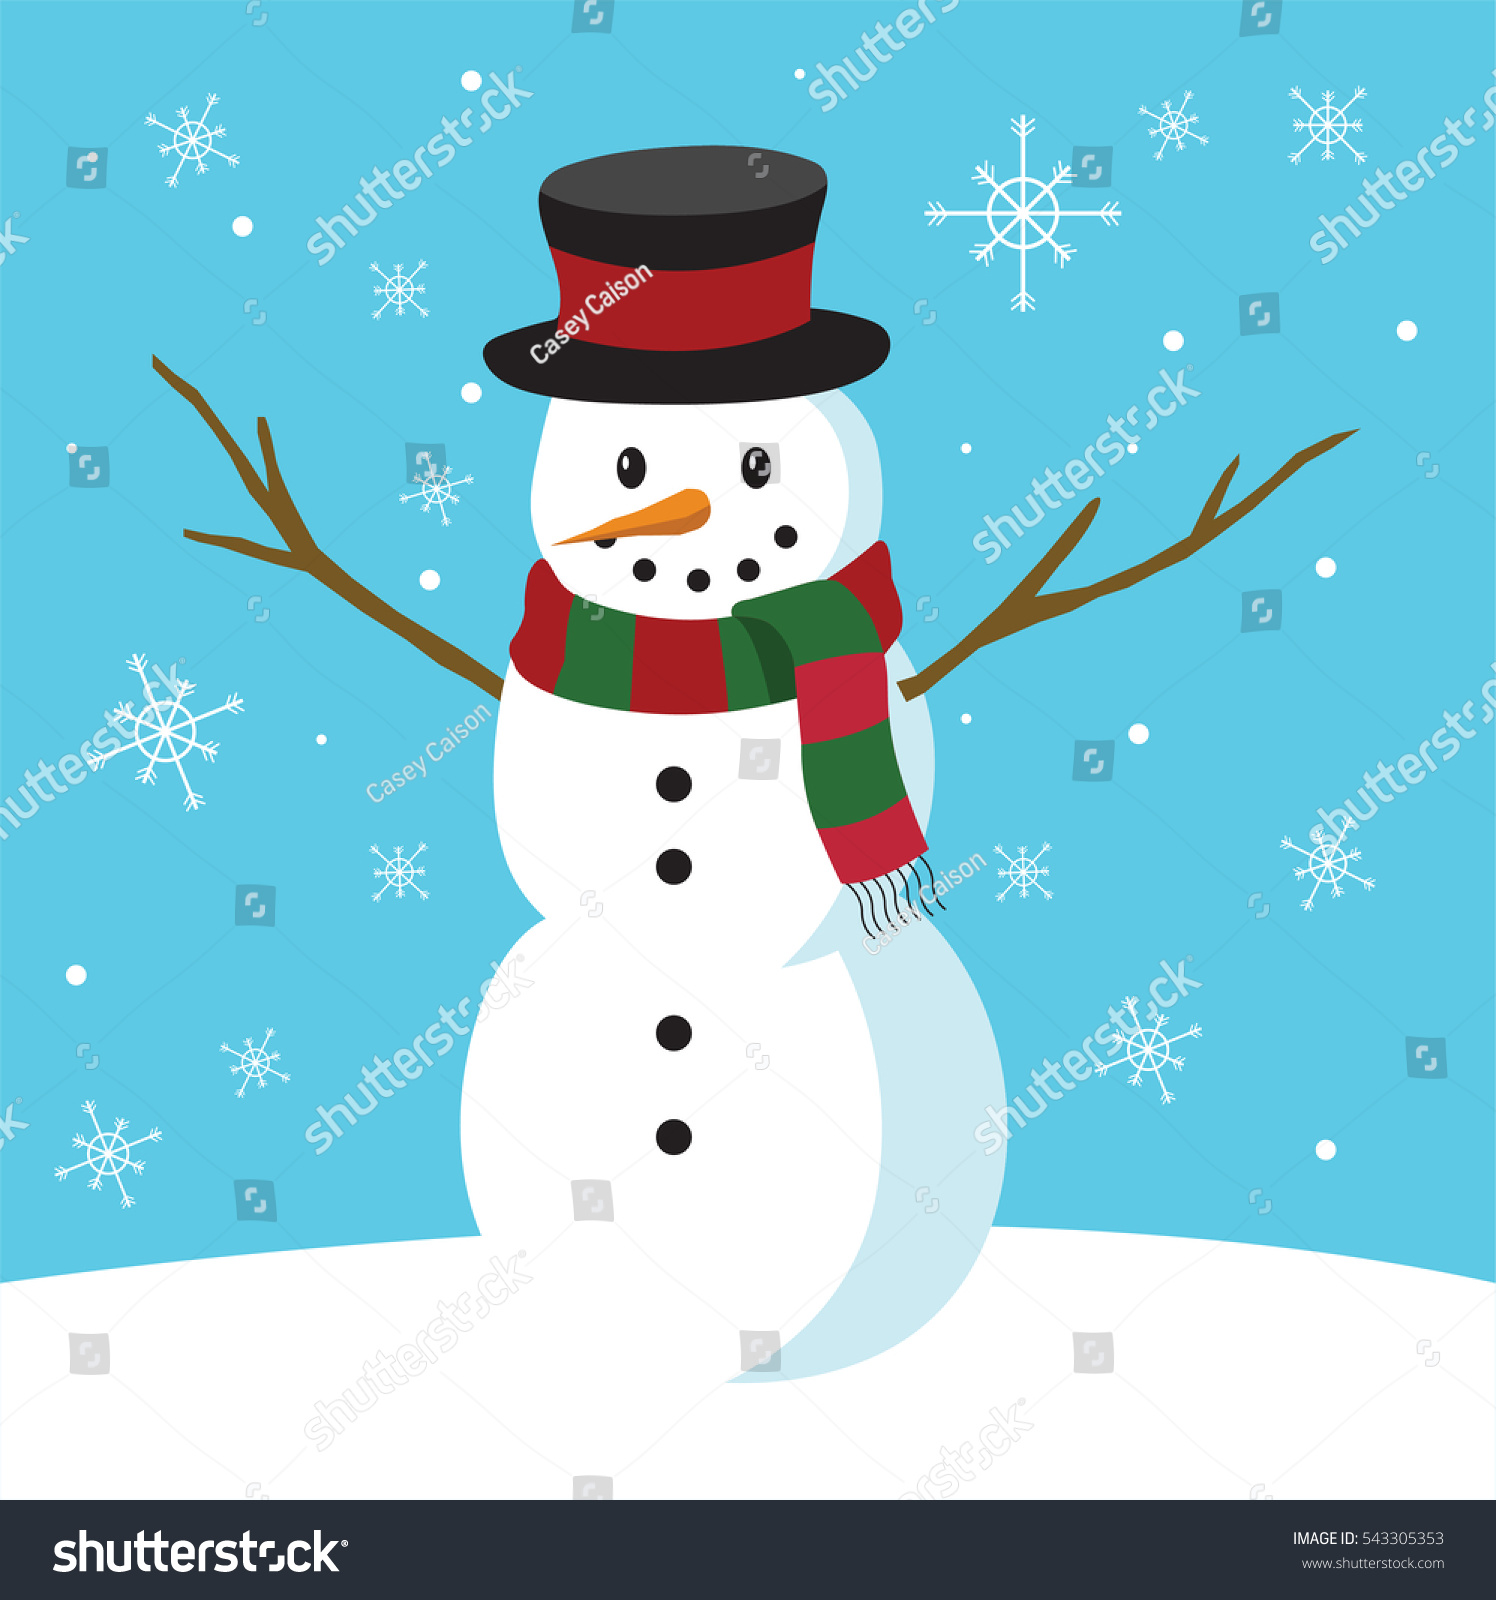 Snowman Vector Image - 543305353 : Shutterstock